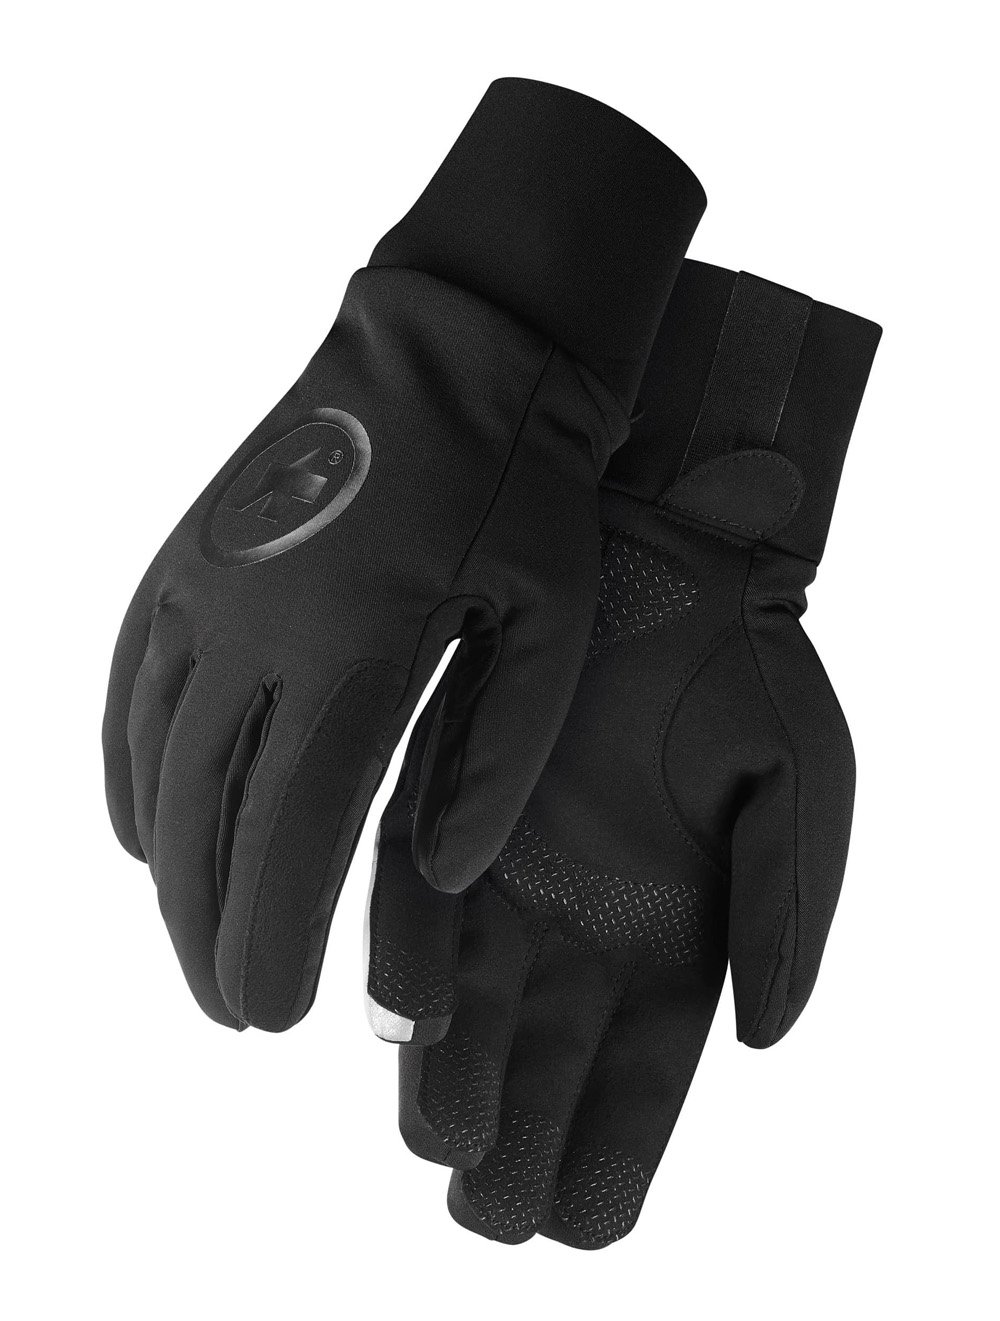 Cycle Gloves Assos Ultraz Winter - Bikable